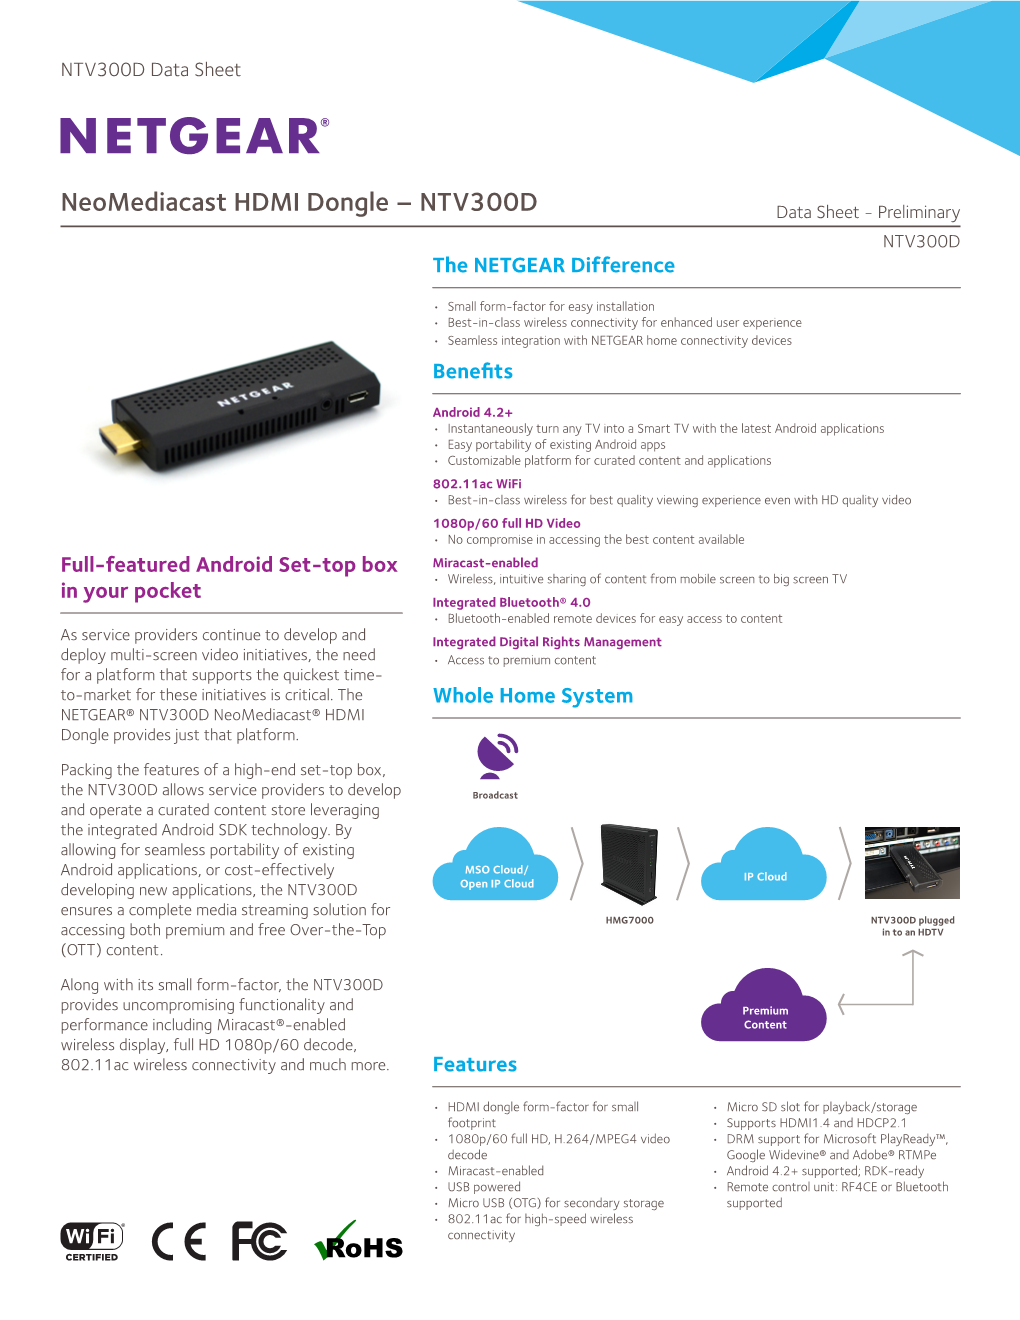 Neomediacast HDMI Dongle – NTV300D Data Sheet - Preliminary NTV300D the NETGEAR Difference